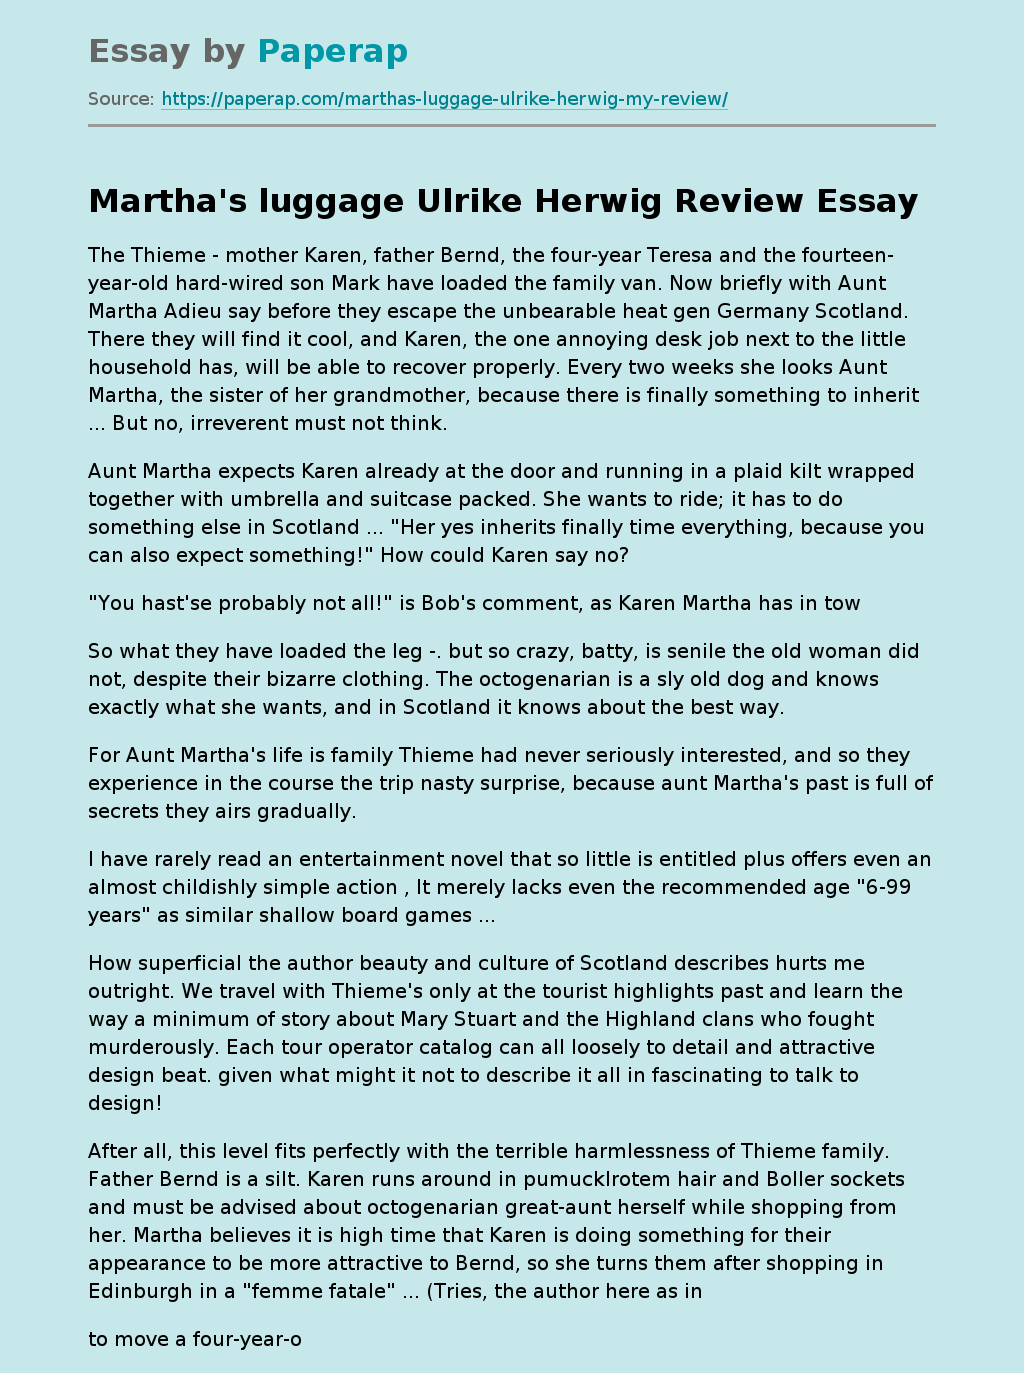 Martha’s Luggage by Ulrike Herwig